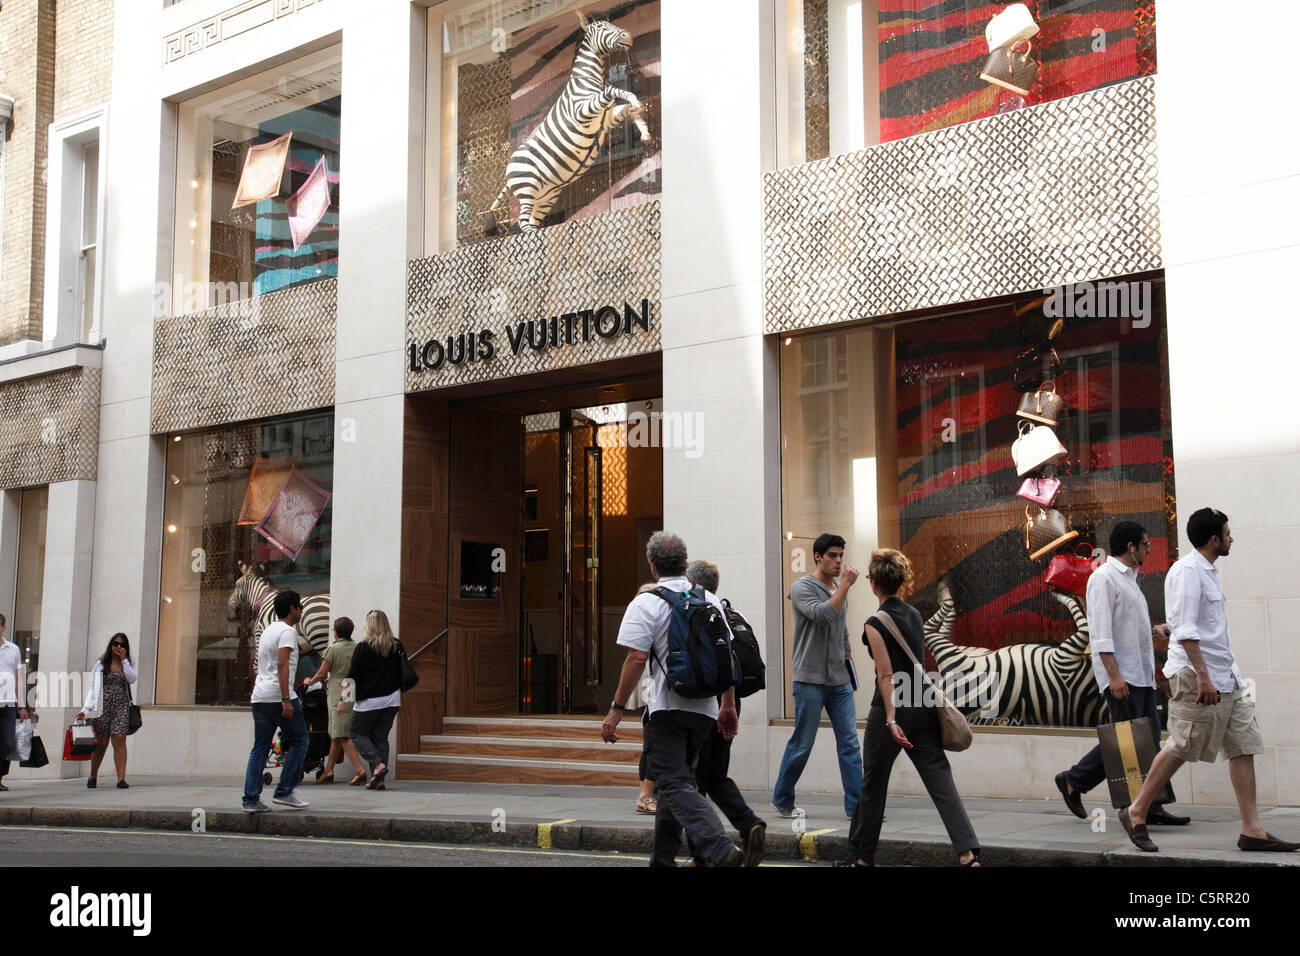 A Louis Vuitton store on New Bond Street, London, England, U.K Stock Photo - Alamy